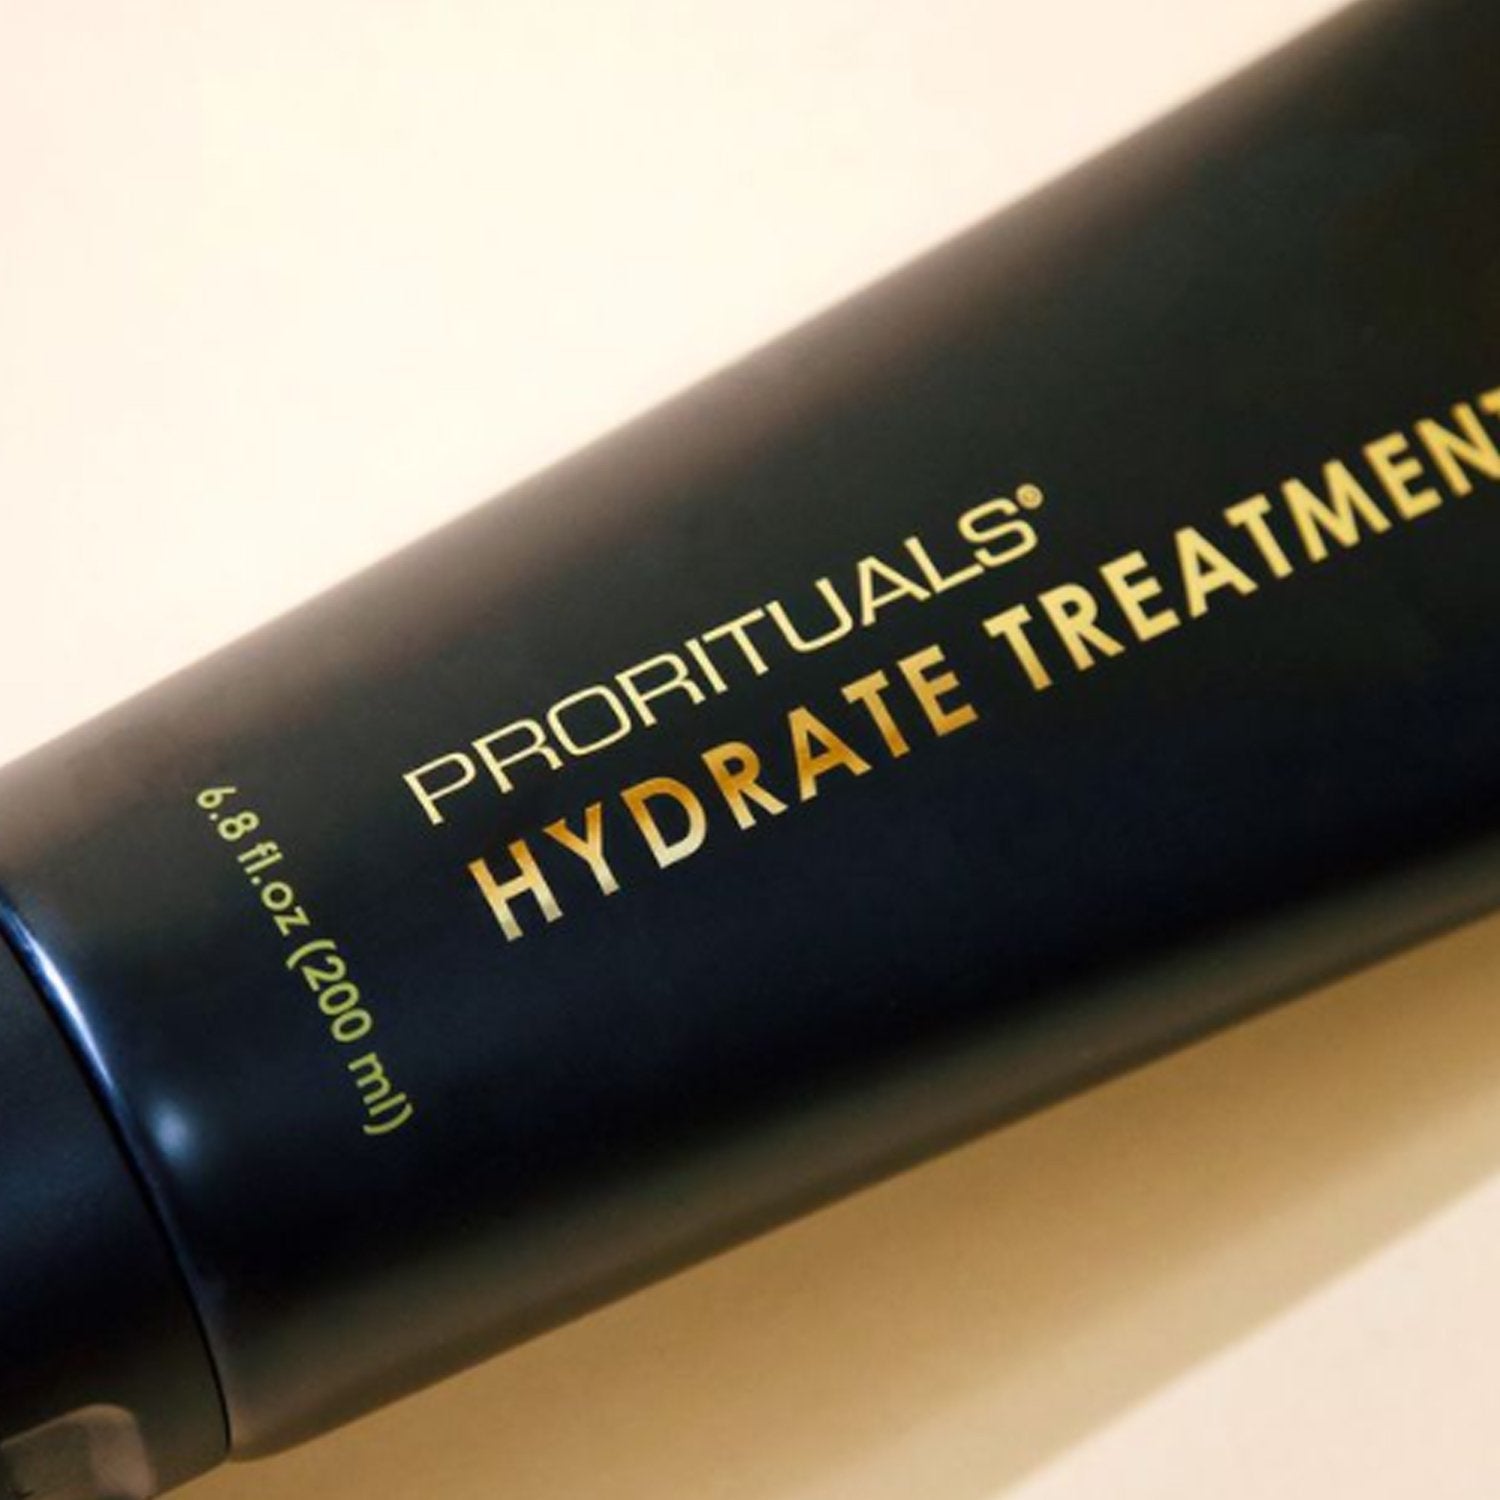 Prorituals Hydrate Treatment